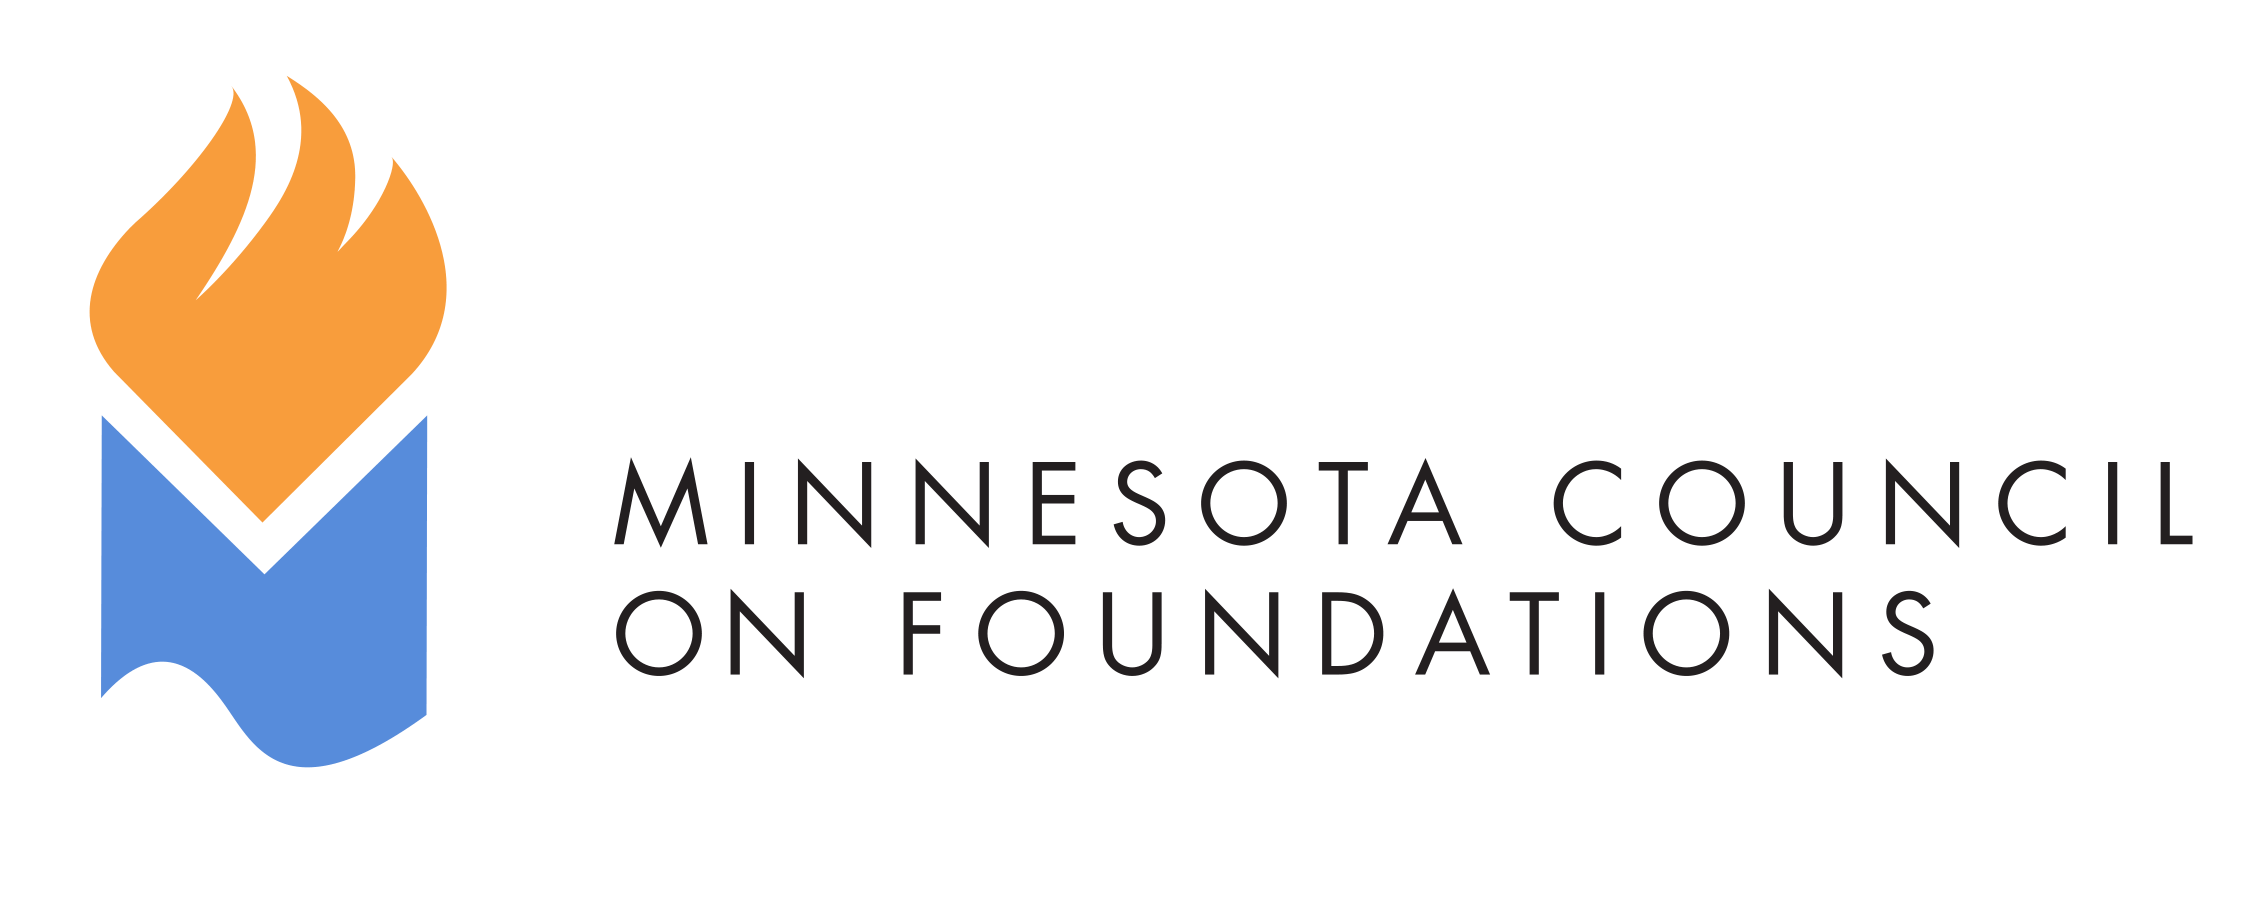 Minnesota Council on Foundations